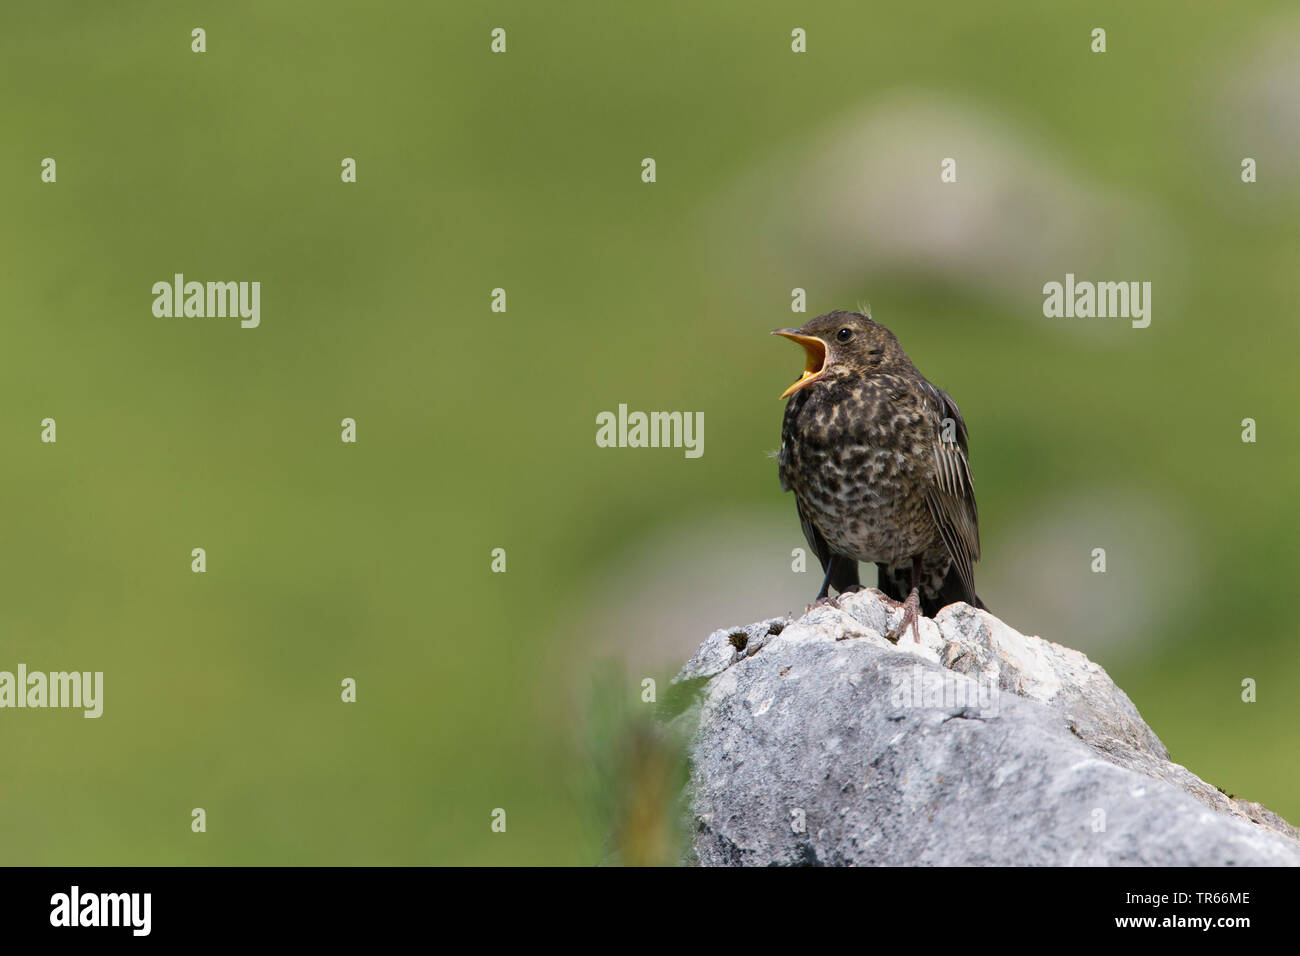 chat-shrike (Lanioturdus torquatus, Turdus torquatus), calling young bird on a stone, Germany Stock Photo